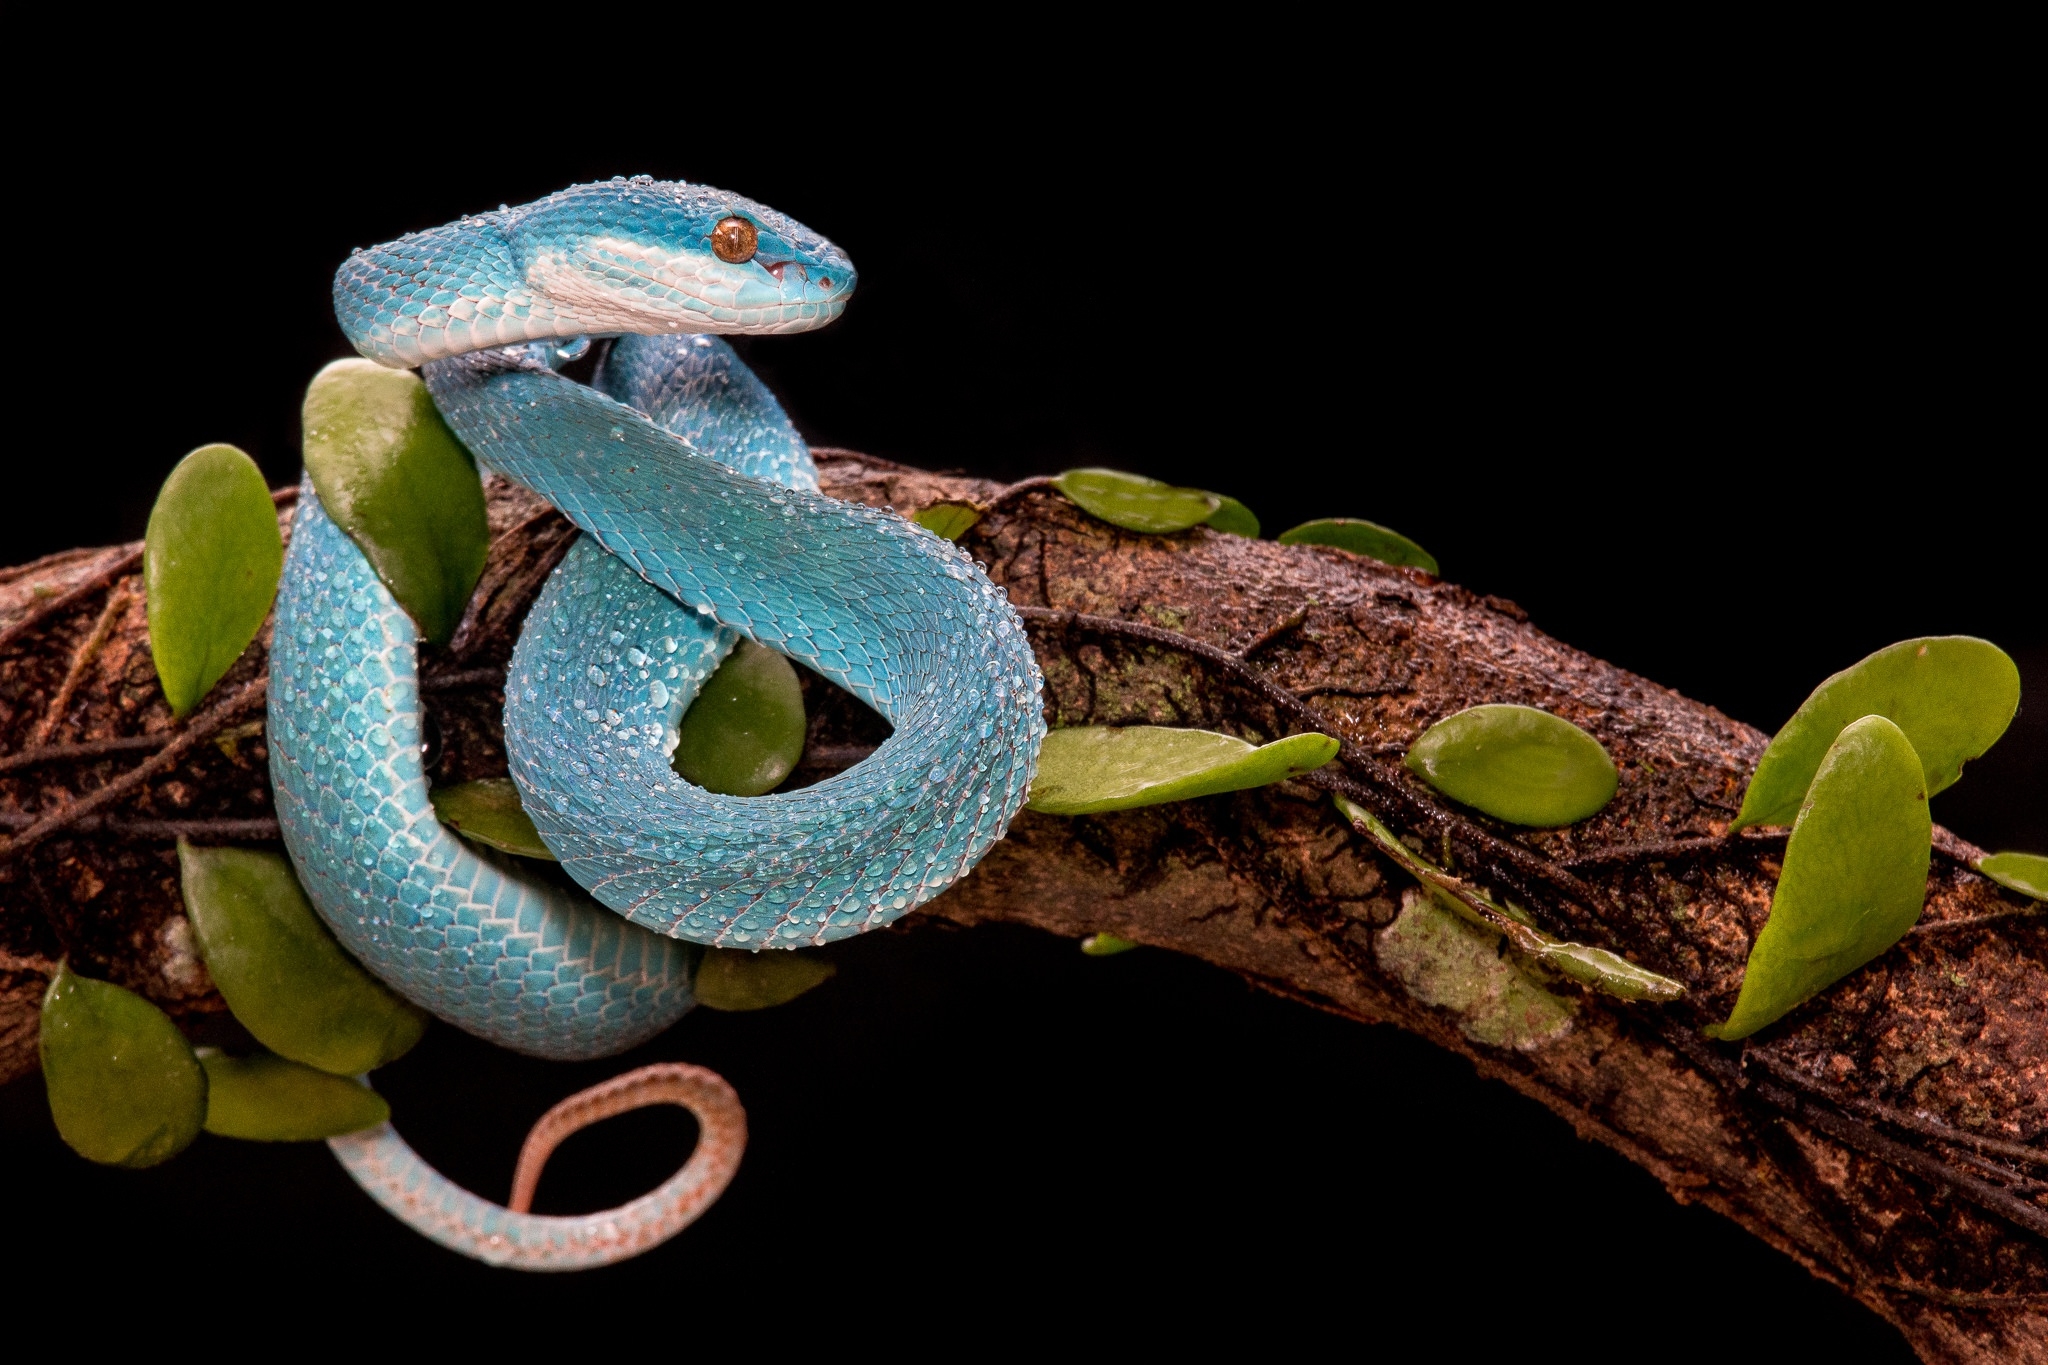 A blue snake tied around a branch